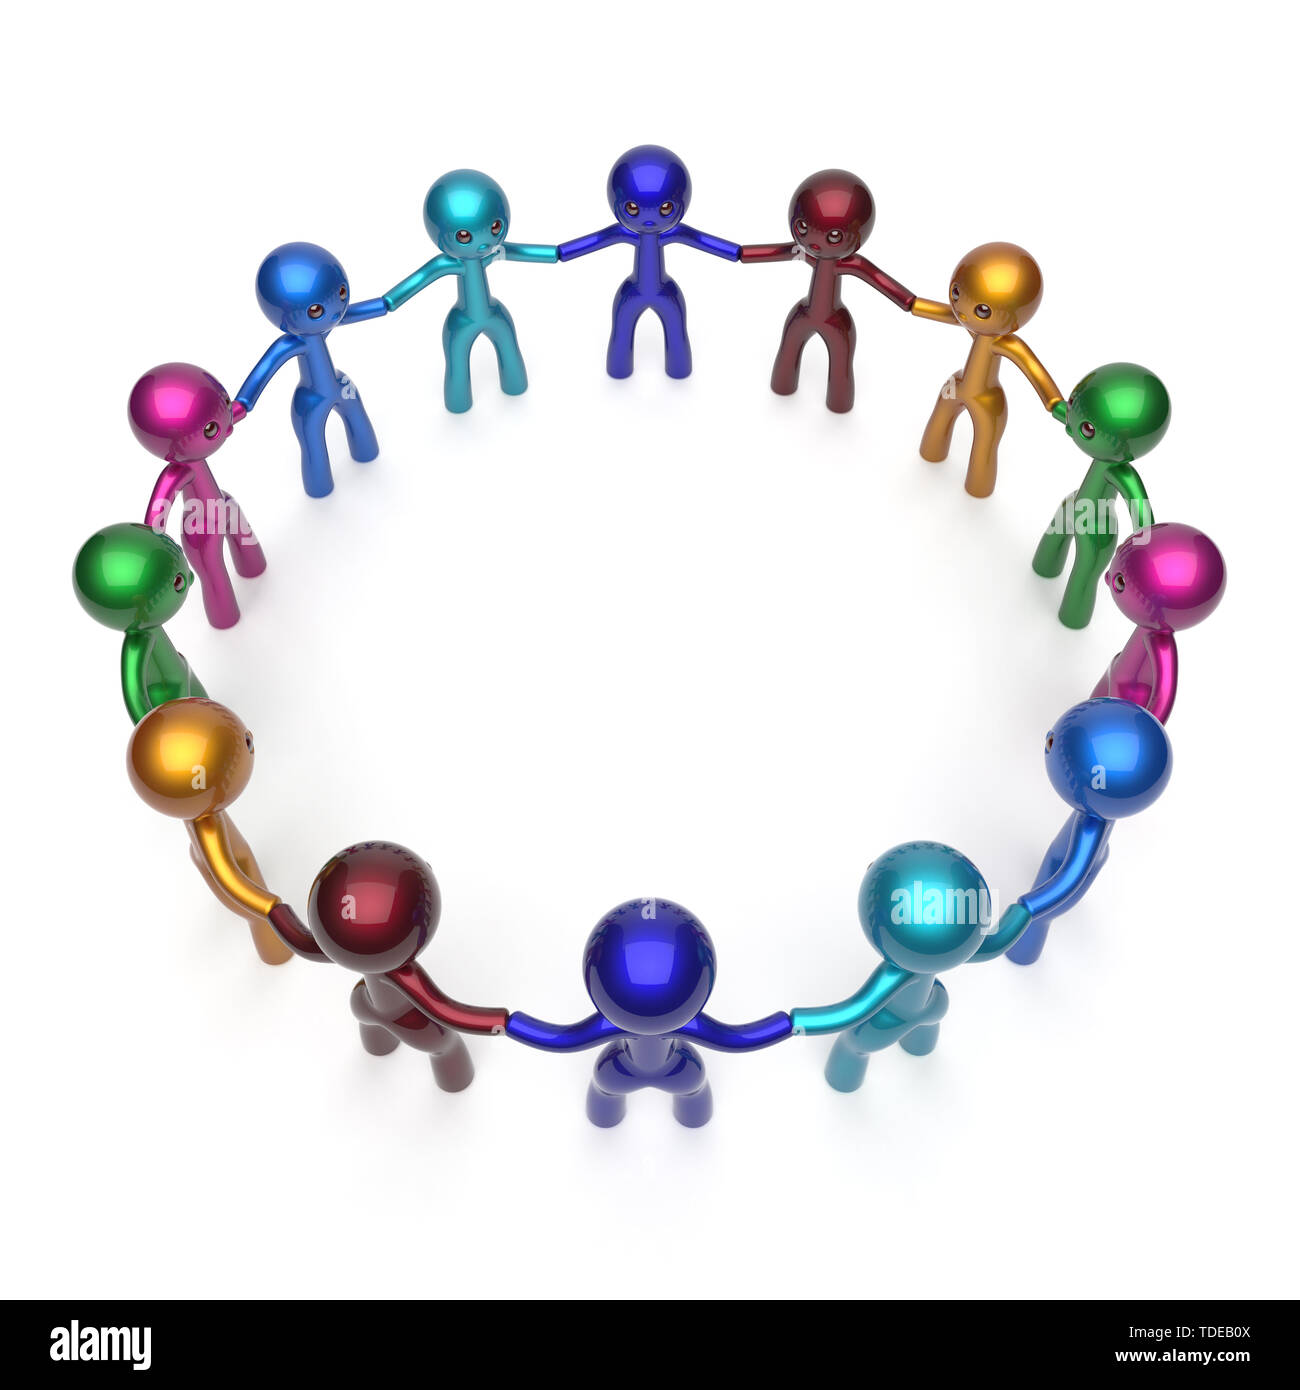 https://c8.alamy.com/comp/TDEB0X/teamwork-men-people-circle-social-network-individuality-characters-human-resources-friendship-team-different-cartoon-friends-unity-meeting-bra-TDEB0X.jpg